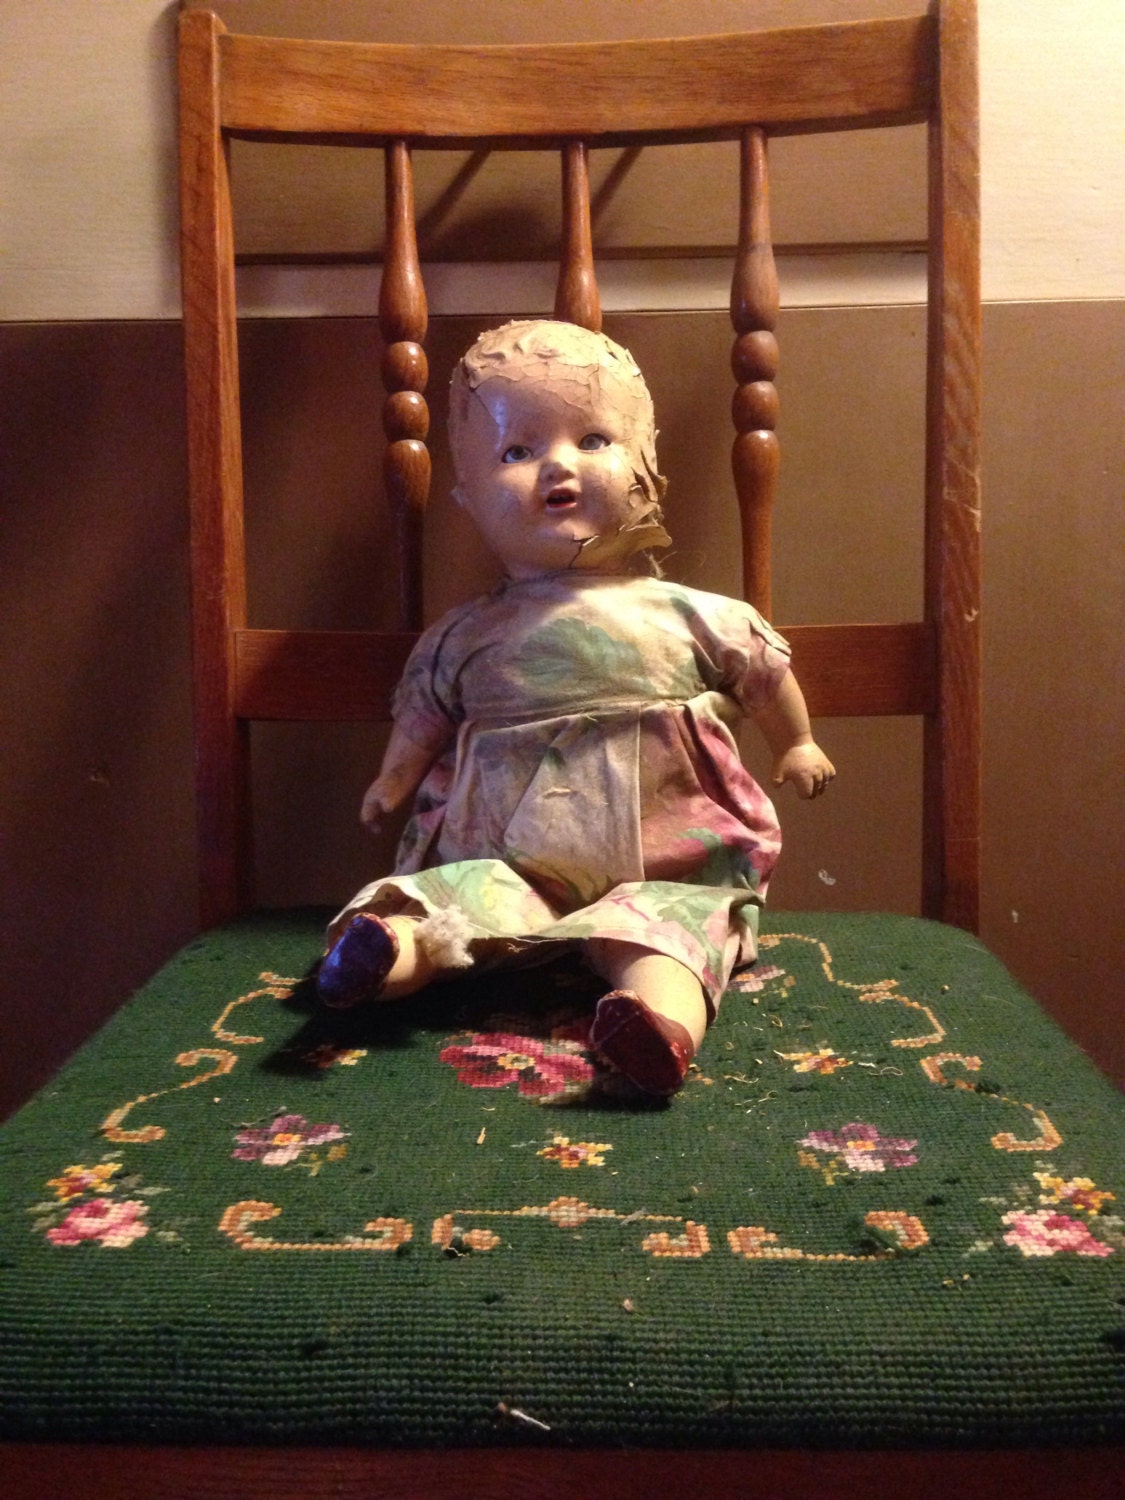 Broken Baby Doll Abigail by OwlBearAlley on Etsy